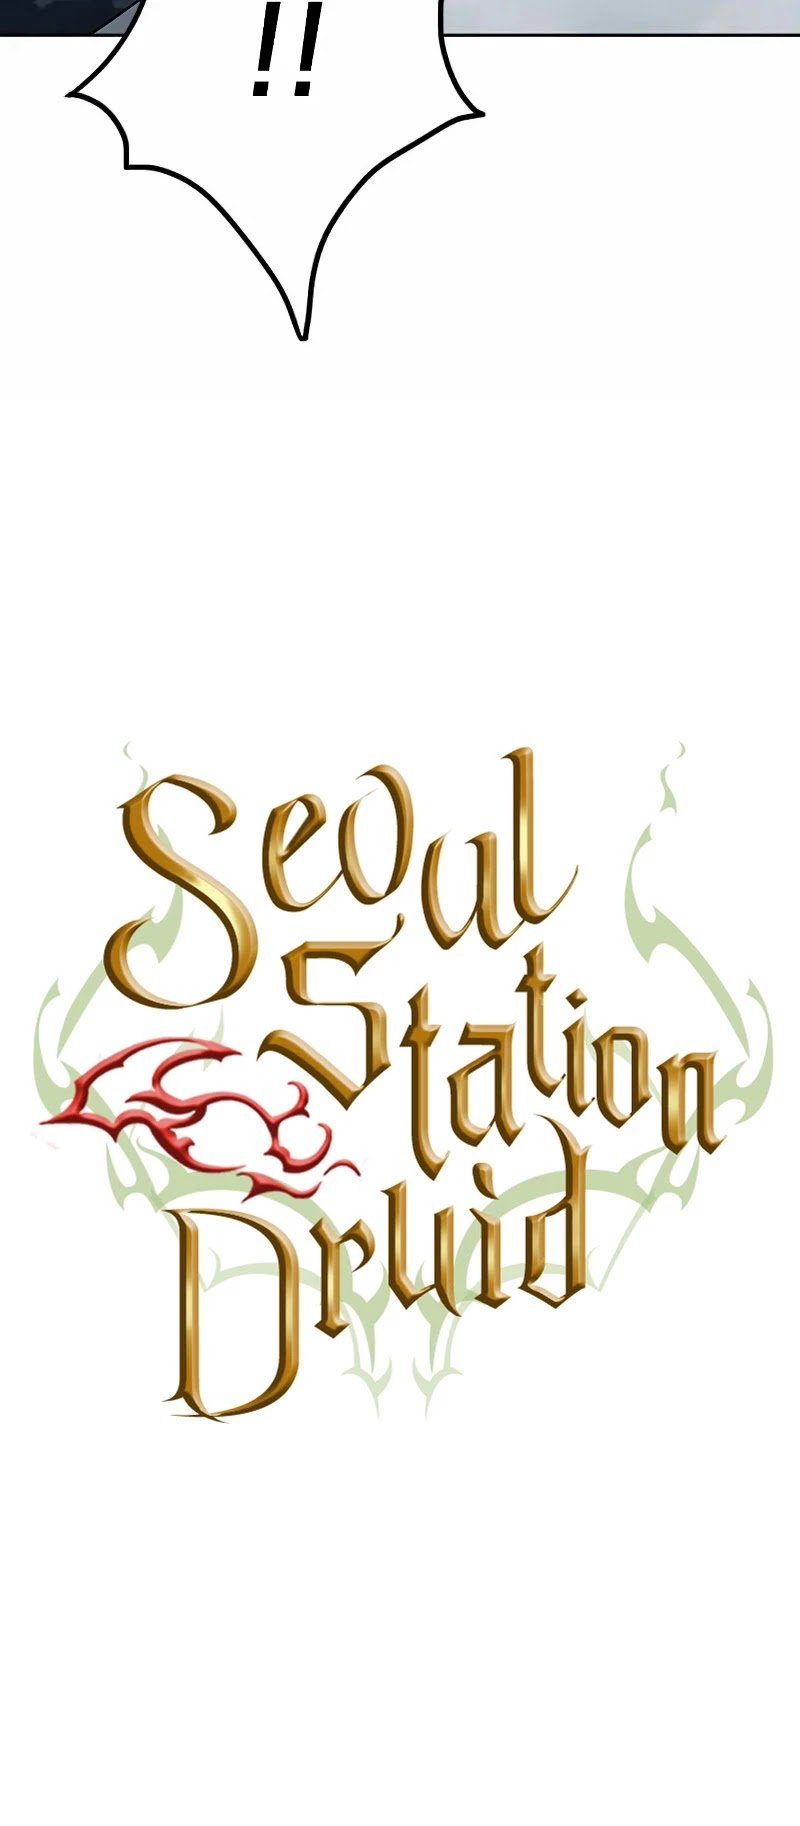 Seoul Station Druid chapter 15